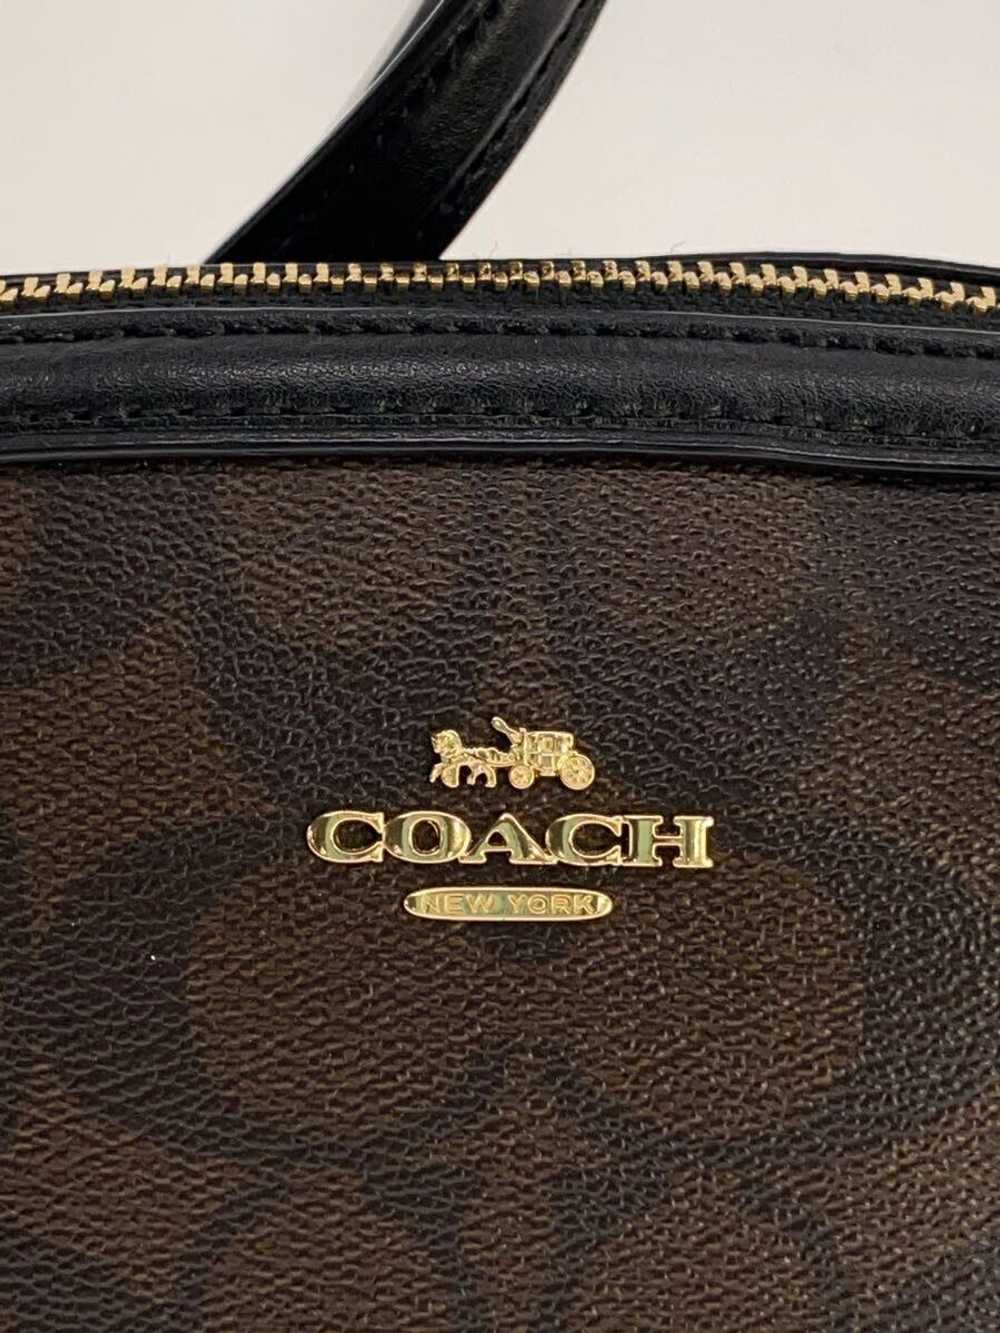 Used  COACH   Handbag       BRW   Total pattern  … - image 5